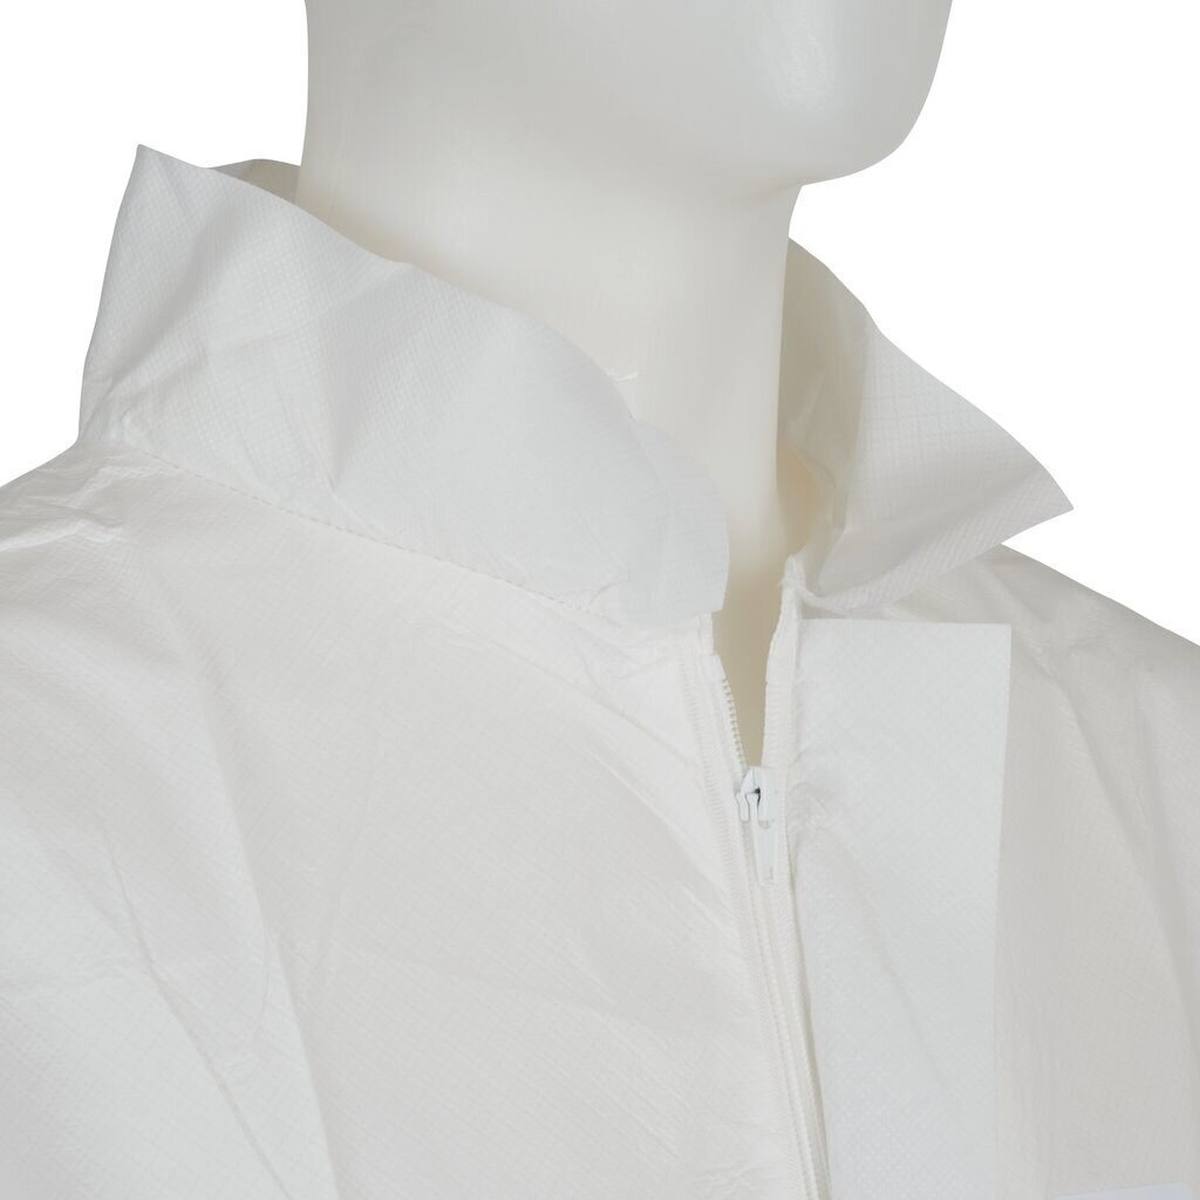 3M 4440 Abrigo, blanco, talla 4XL, especialmente transpirable, muy ligero, con cremallera, puños de punto